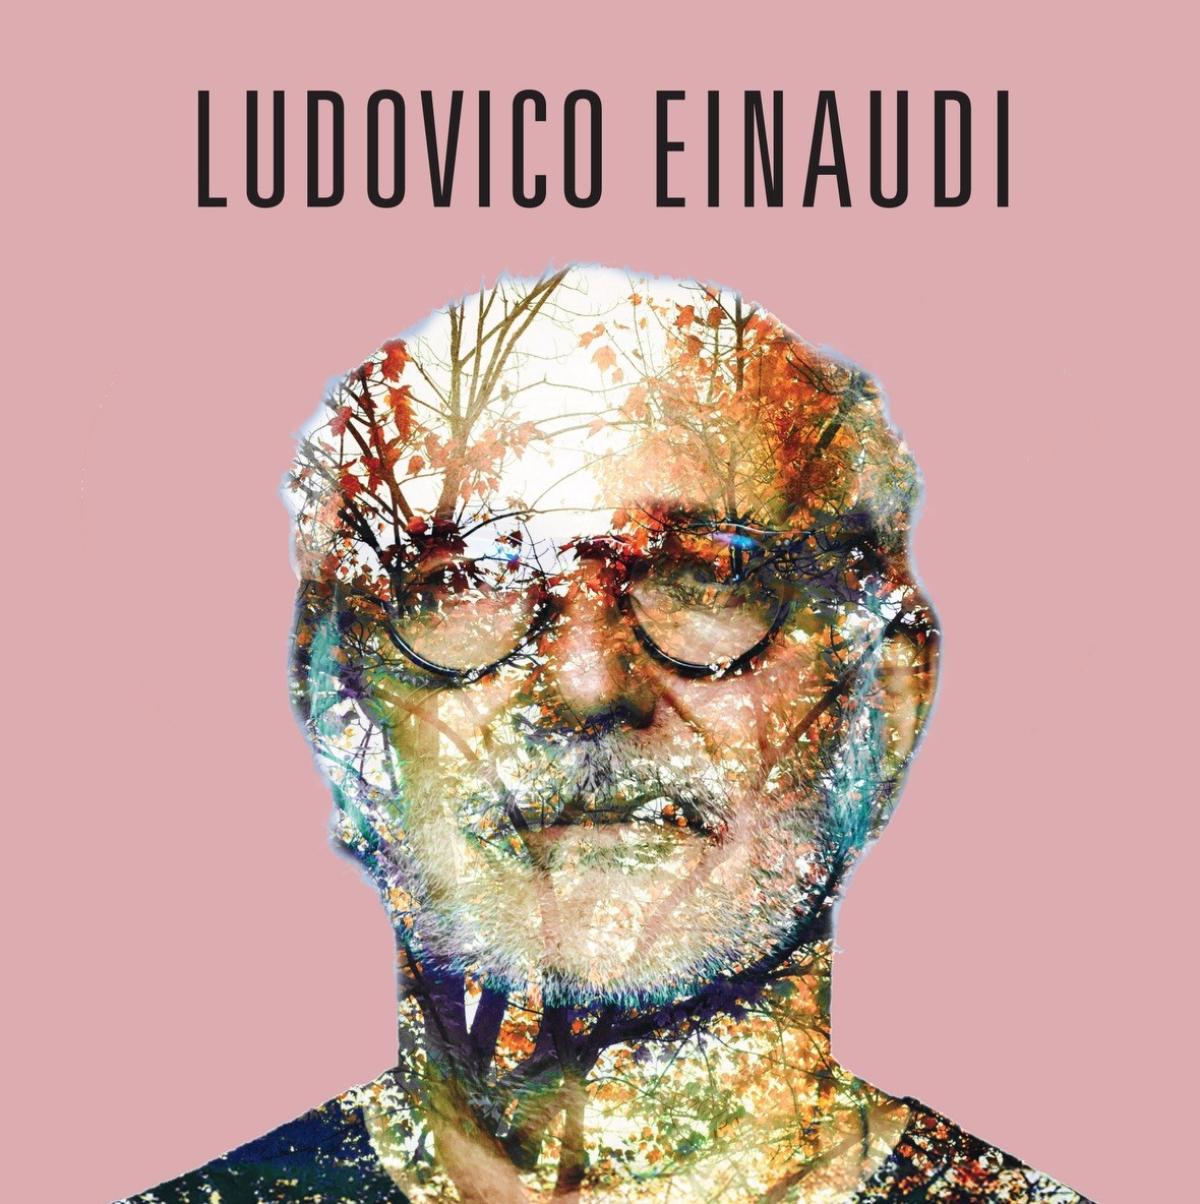 Billets Ludovico Einaudi (Bilbao Arena - Bilbao)